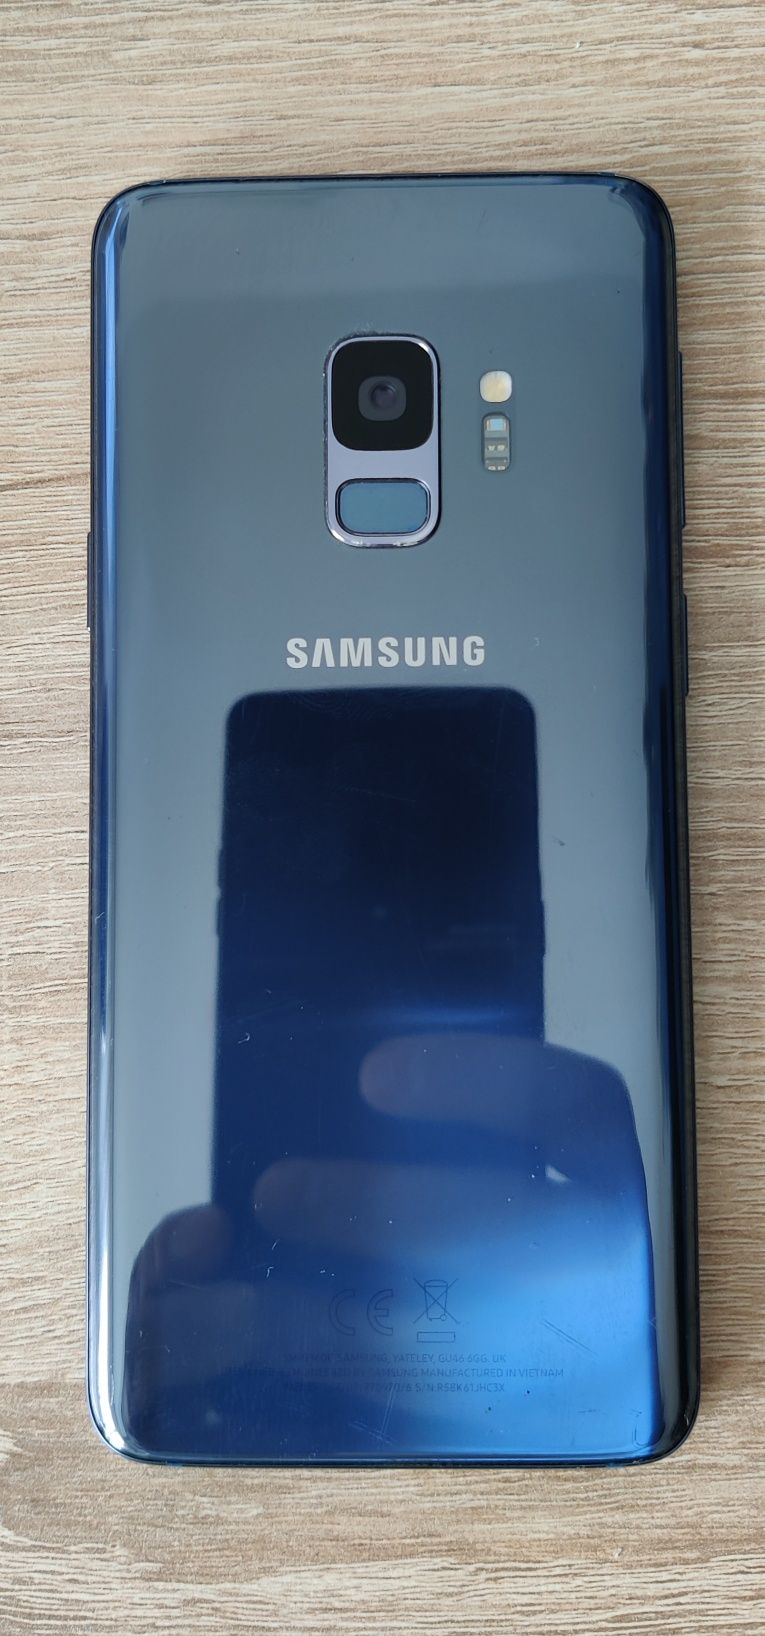 2 x Samsung S9 64gb full box